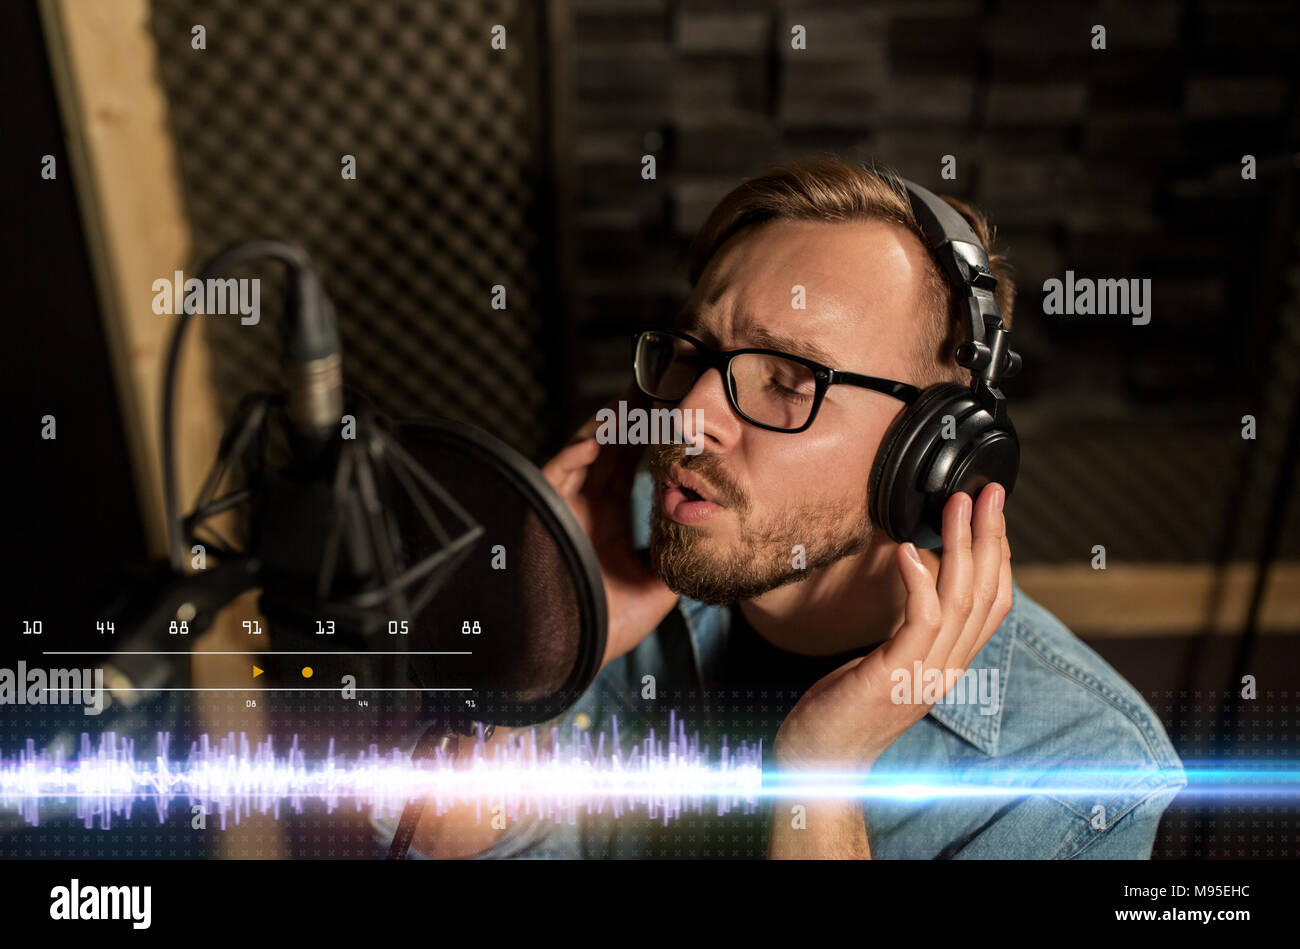 man with headphones singing at recording studio Stock Photo